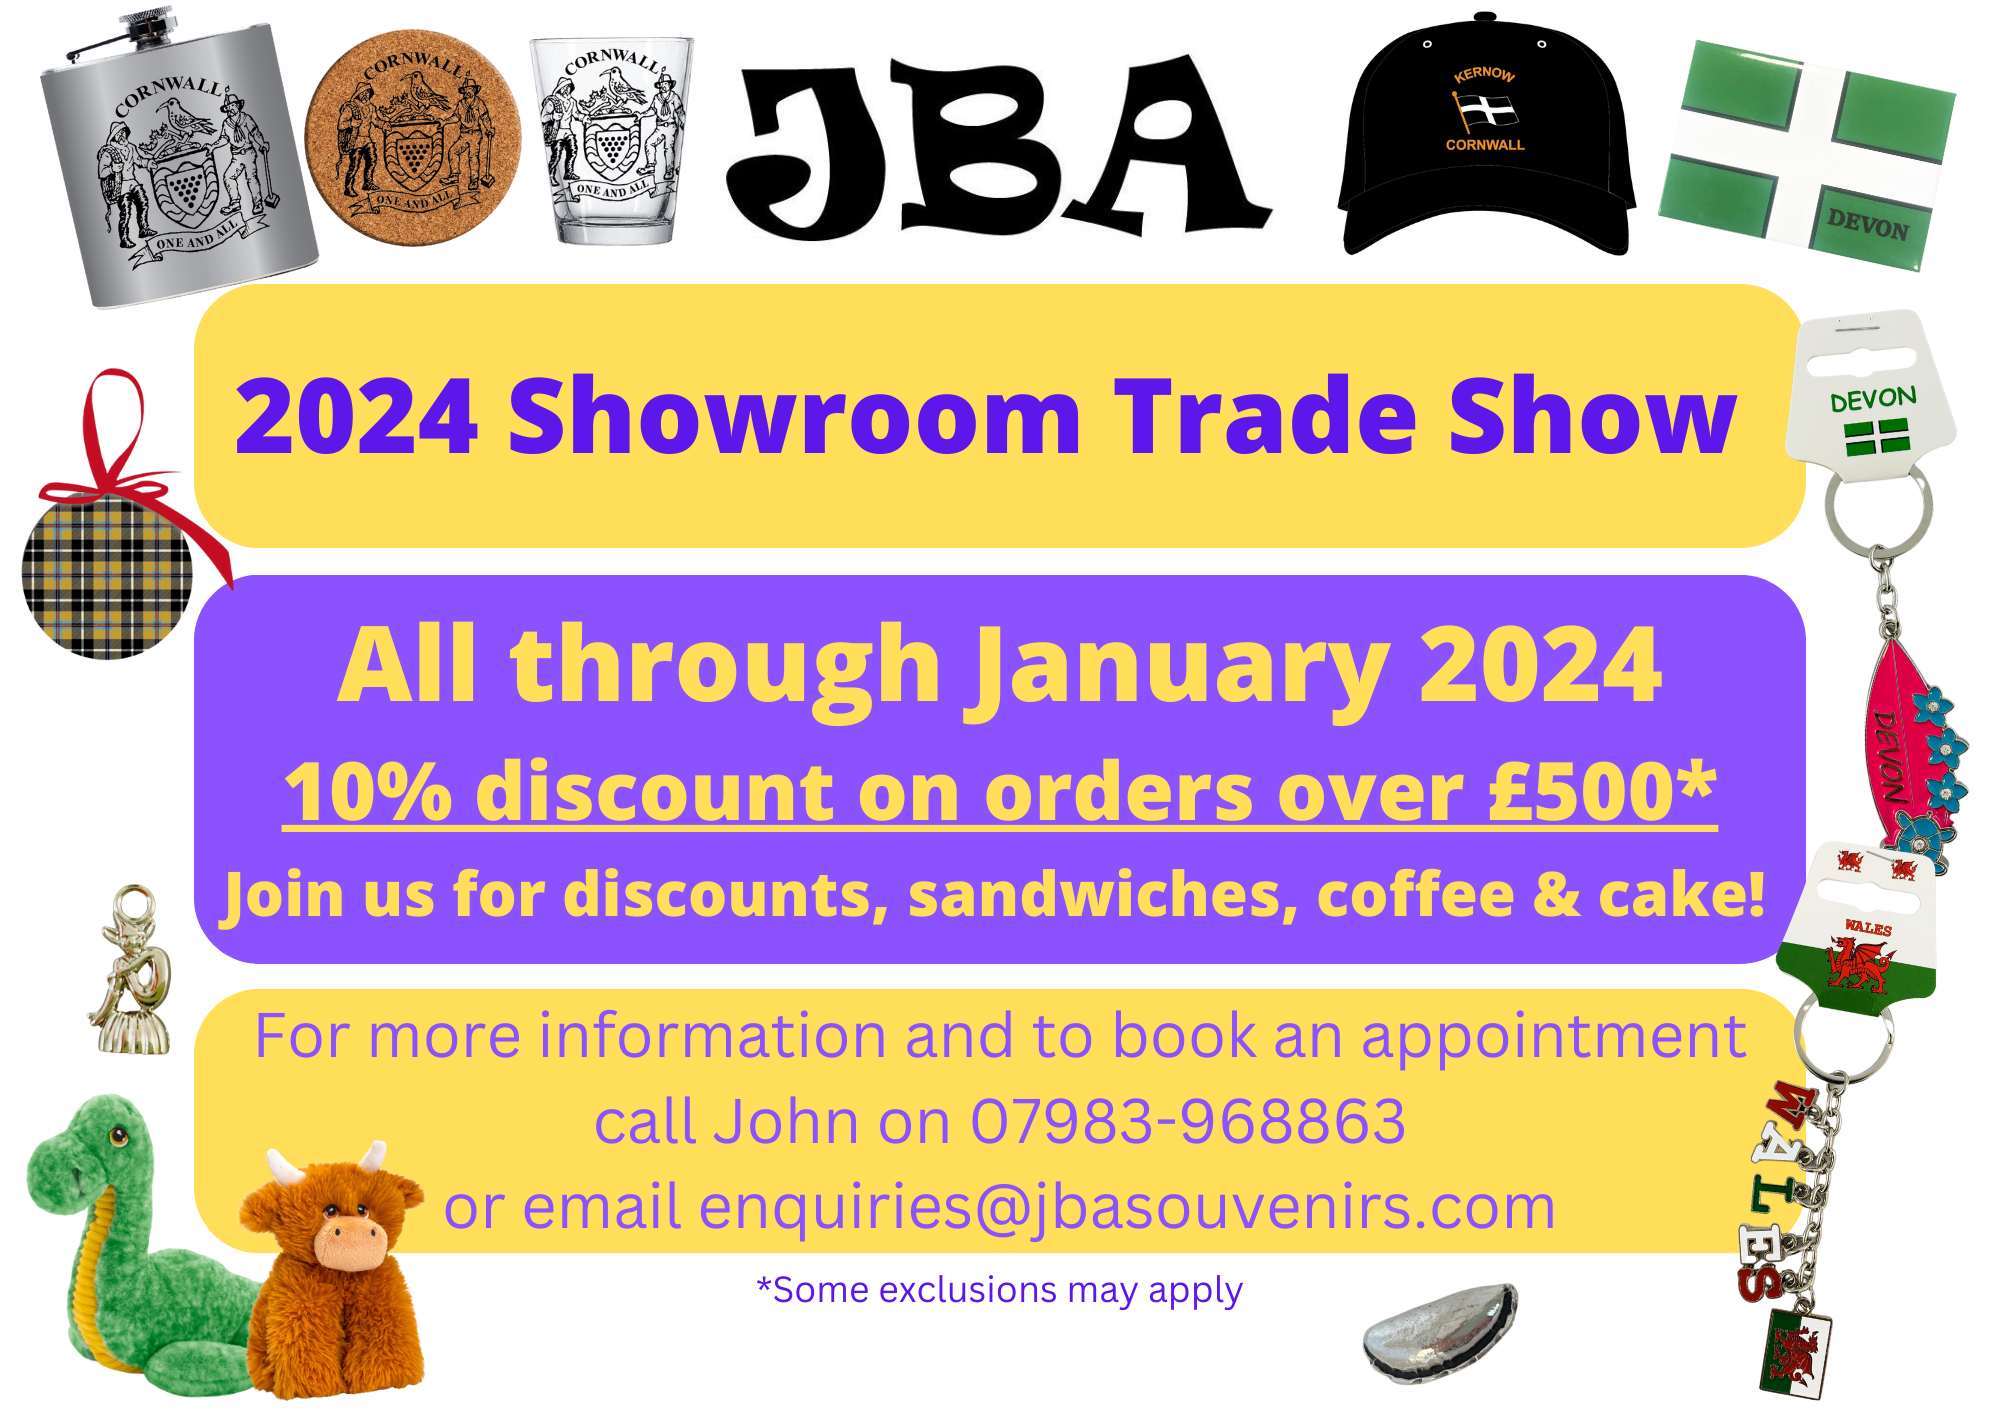 Showroom Trade Show 2024